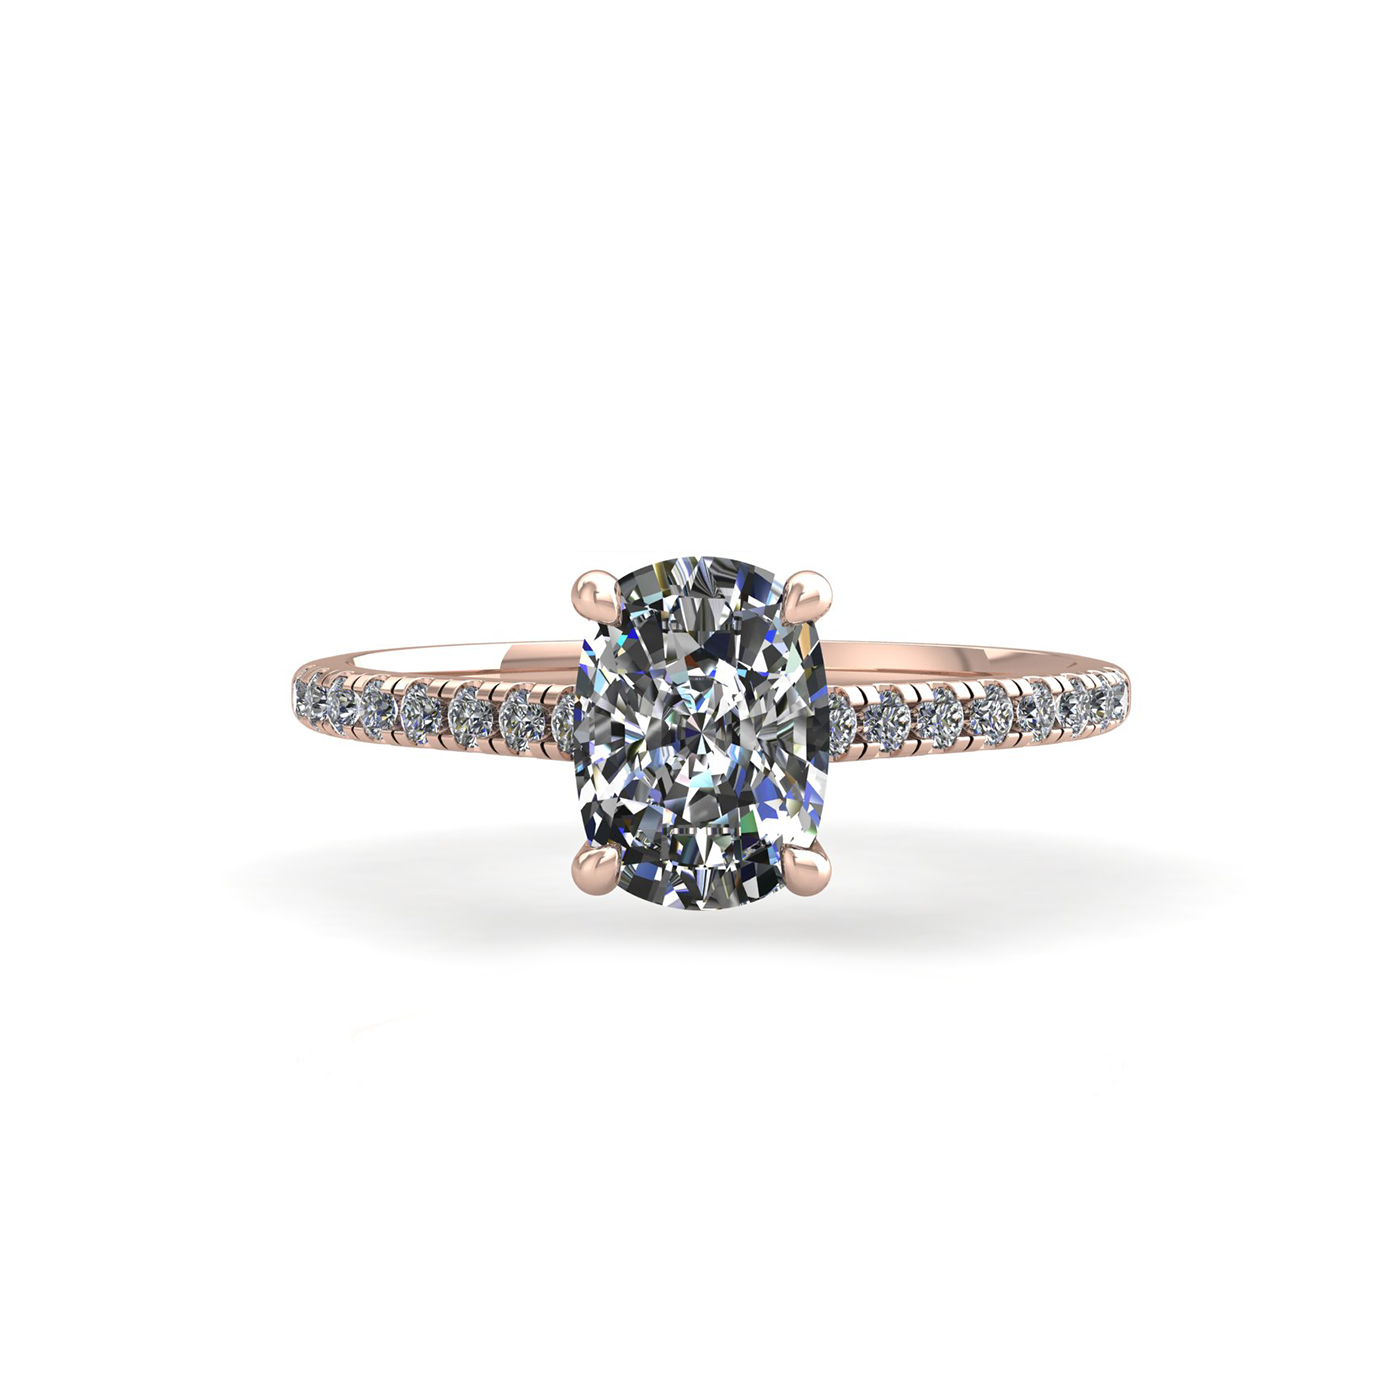 18k rose gold  4 prongs elongated cushion cut diamond engagement ring with whisper thin pavÉ set band Photos & images